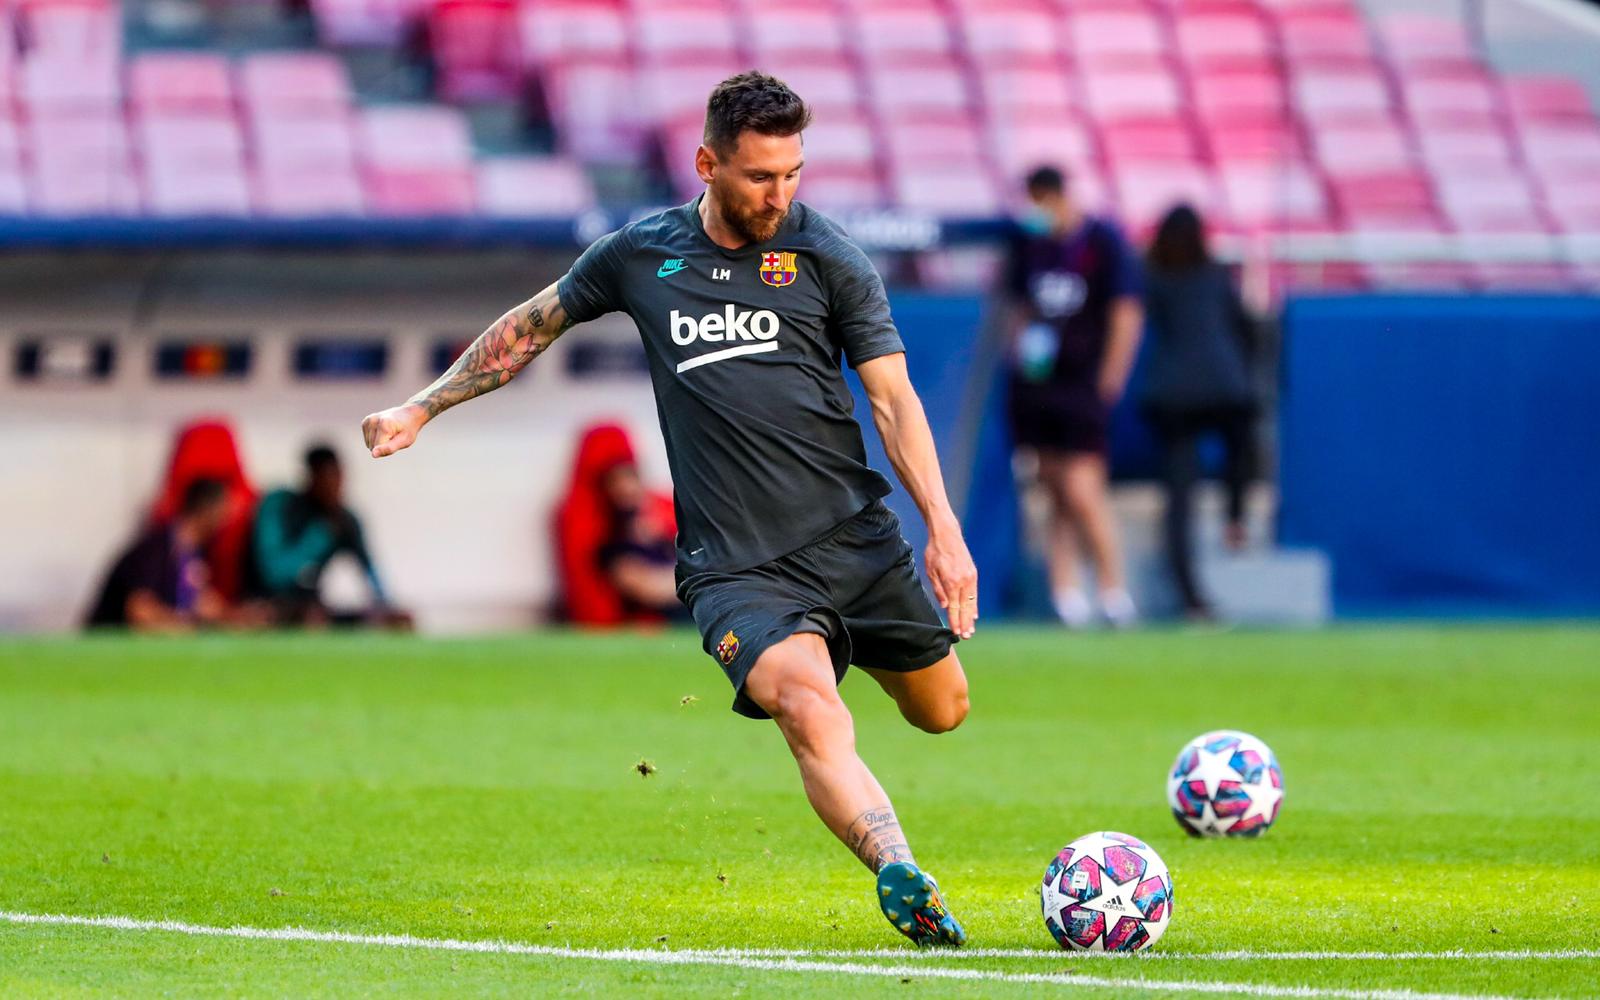 Messi cumple su amenaza. Foto: Twitter Barcelona